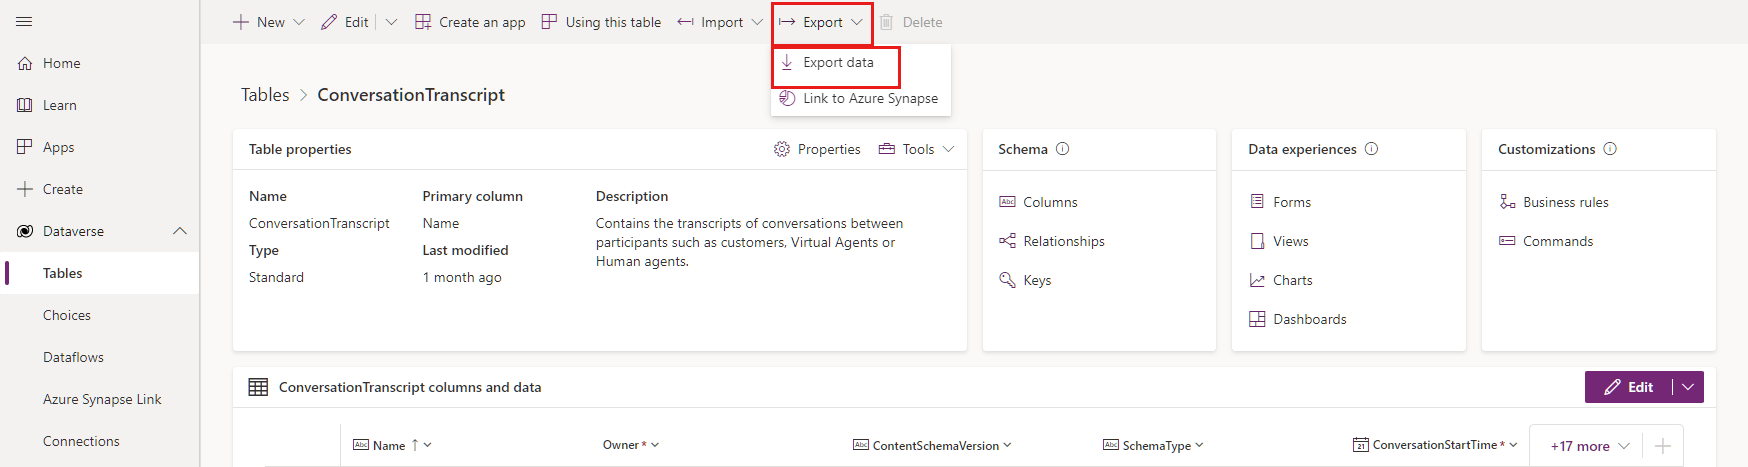 Screenshot of the ConversationTranscript table Export data option.